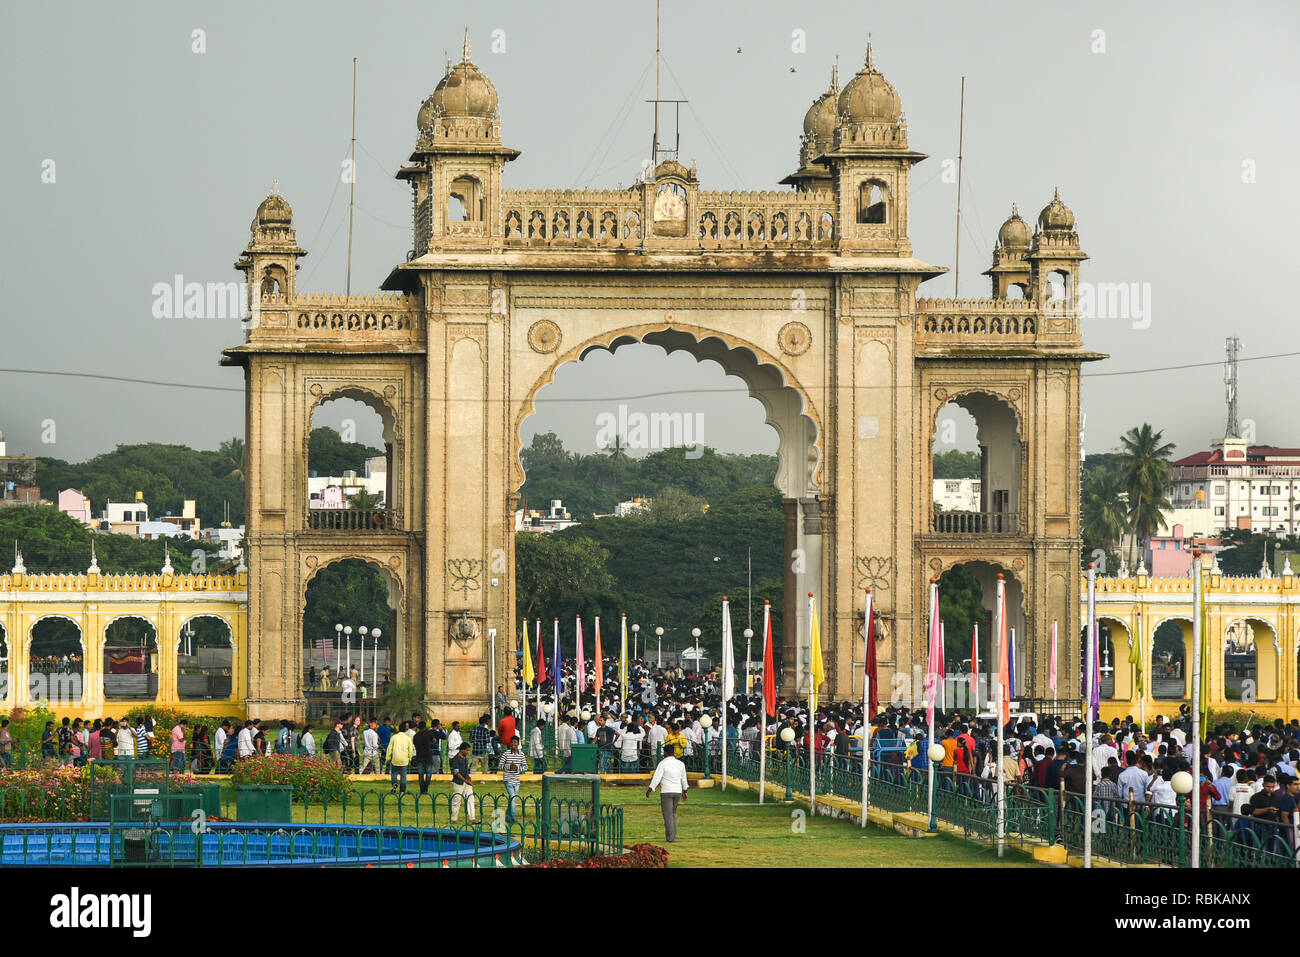 Main entrance gate to the Mysore palace of Indian Maharaja or king , venue of Mysore Dussehra celebration or Dasara festival in Karnataka India Stock Photo